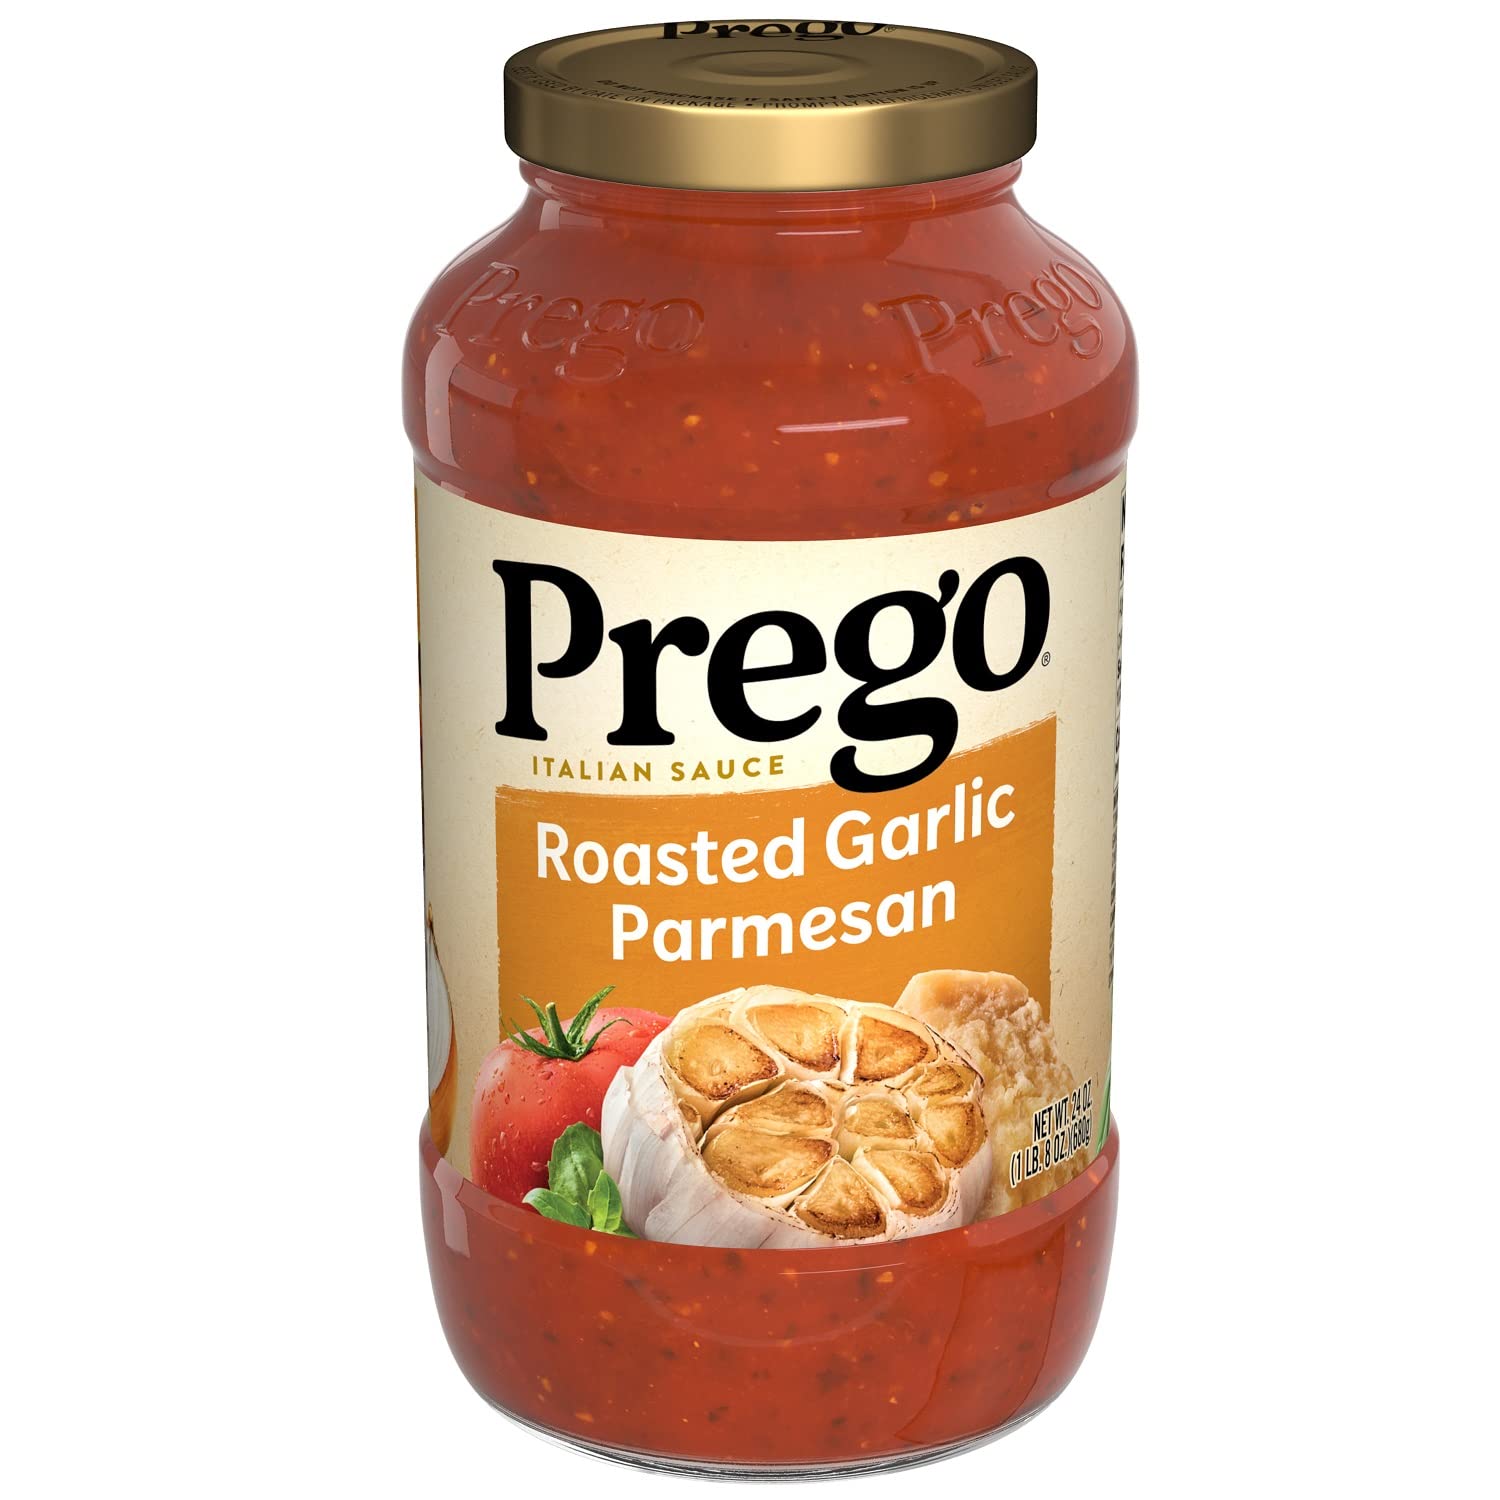 24-Oz Prego Italian Tomato Pasta Sauce w/ Roasted Garlic & Parmesan Cheese $1.60 & More w/ S&S + Free Shipping w/ Prime or on $35+